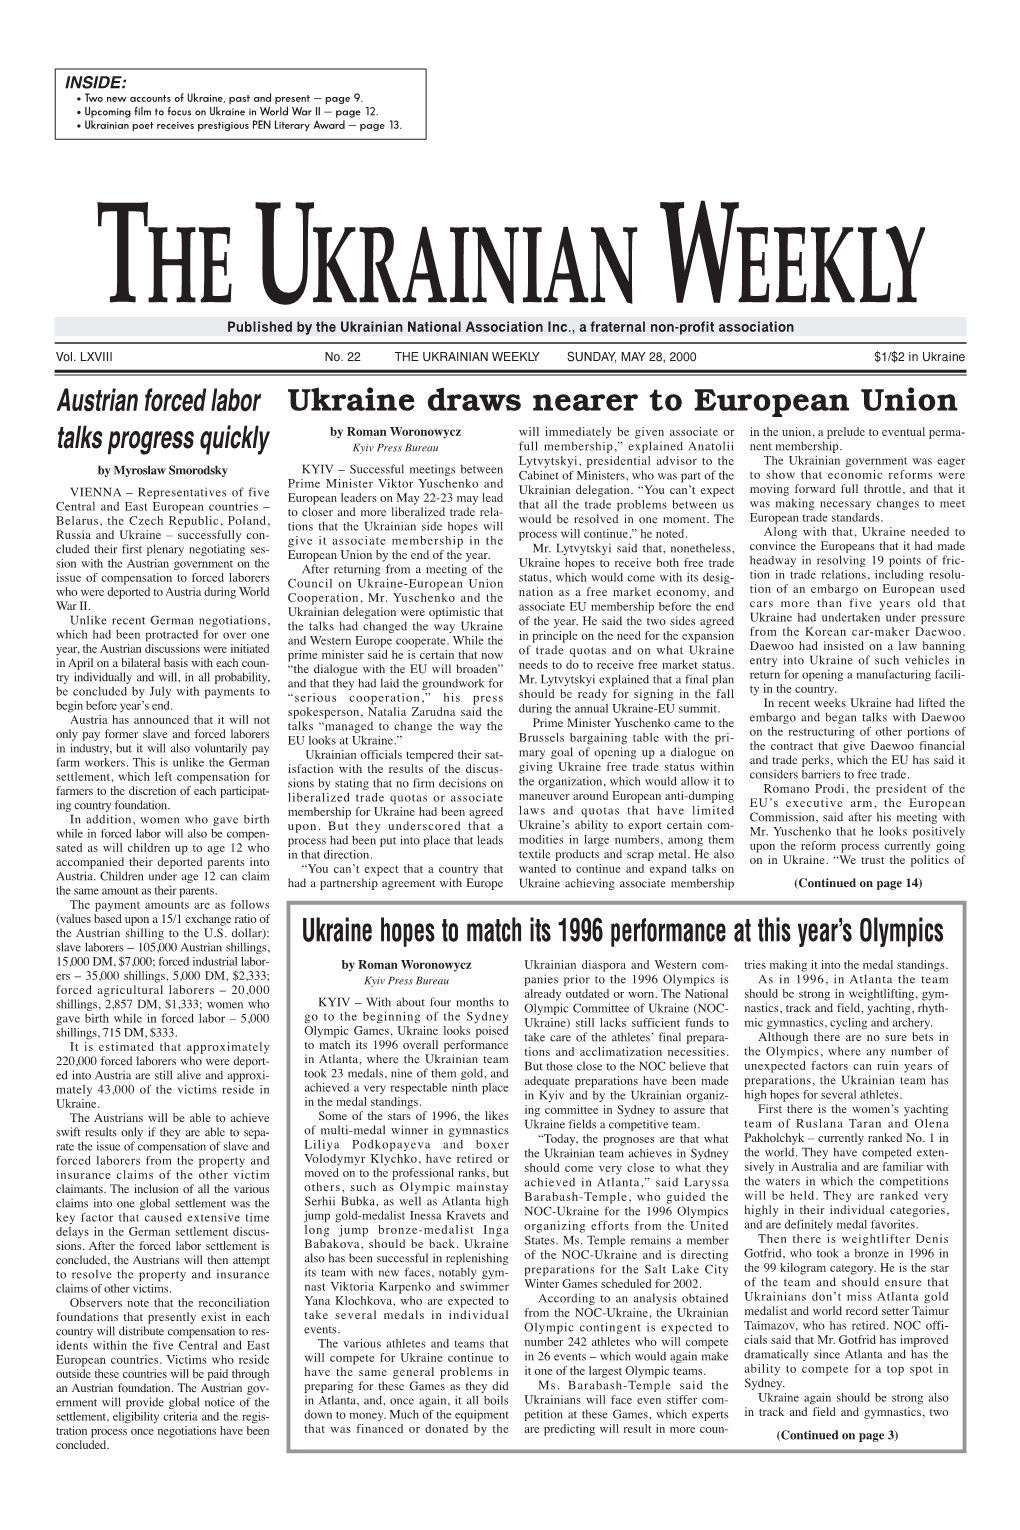 The Ukrainian Weekly 2000, No.22